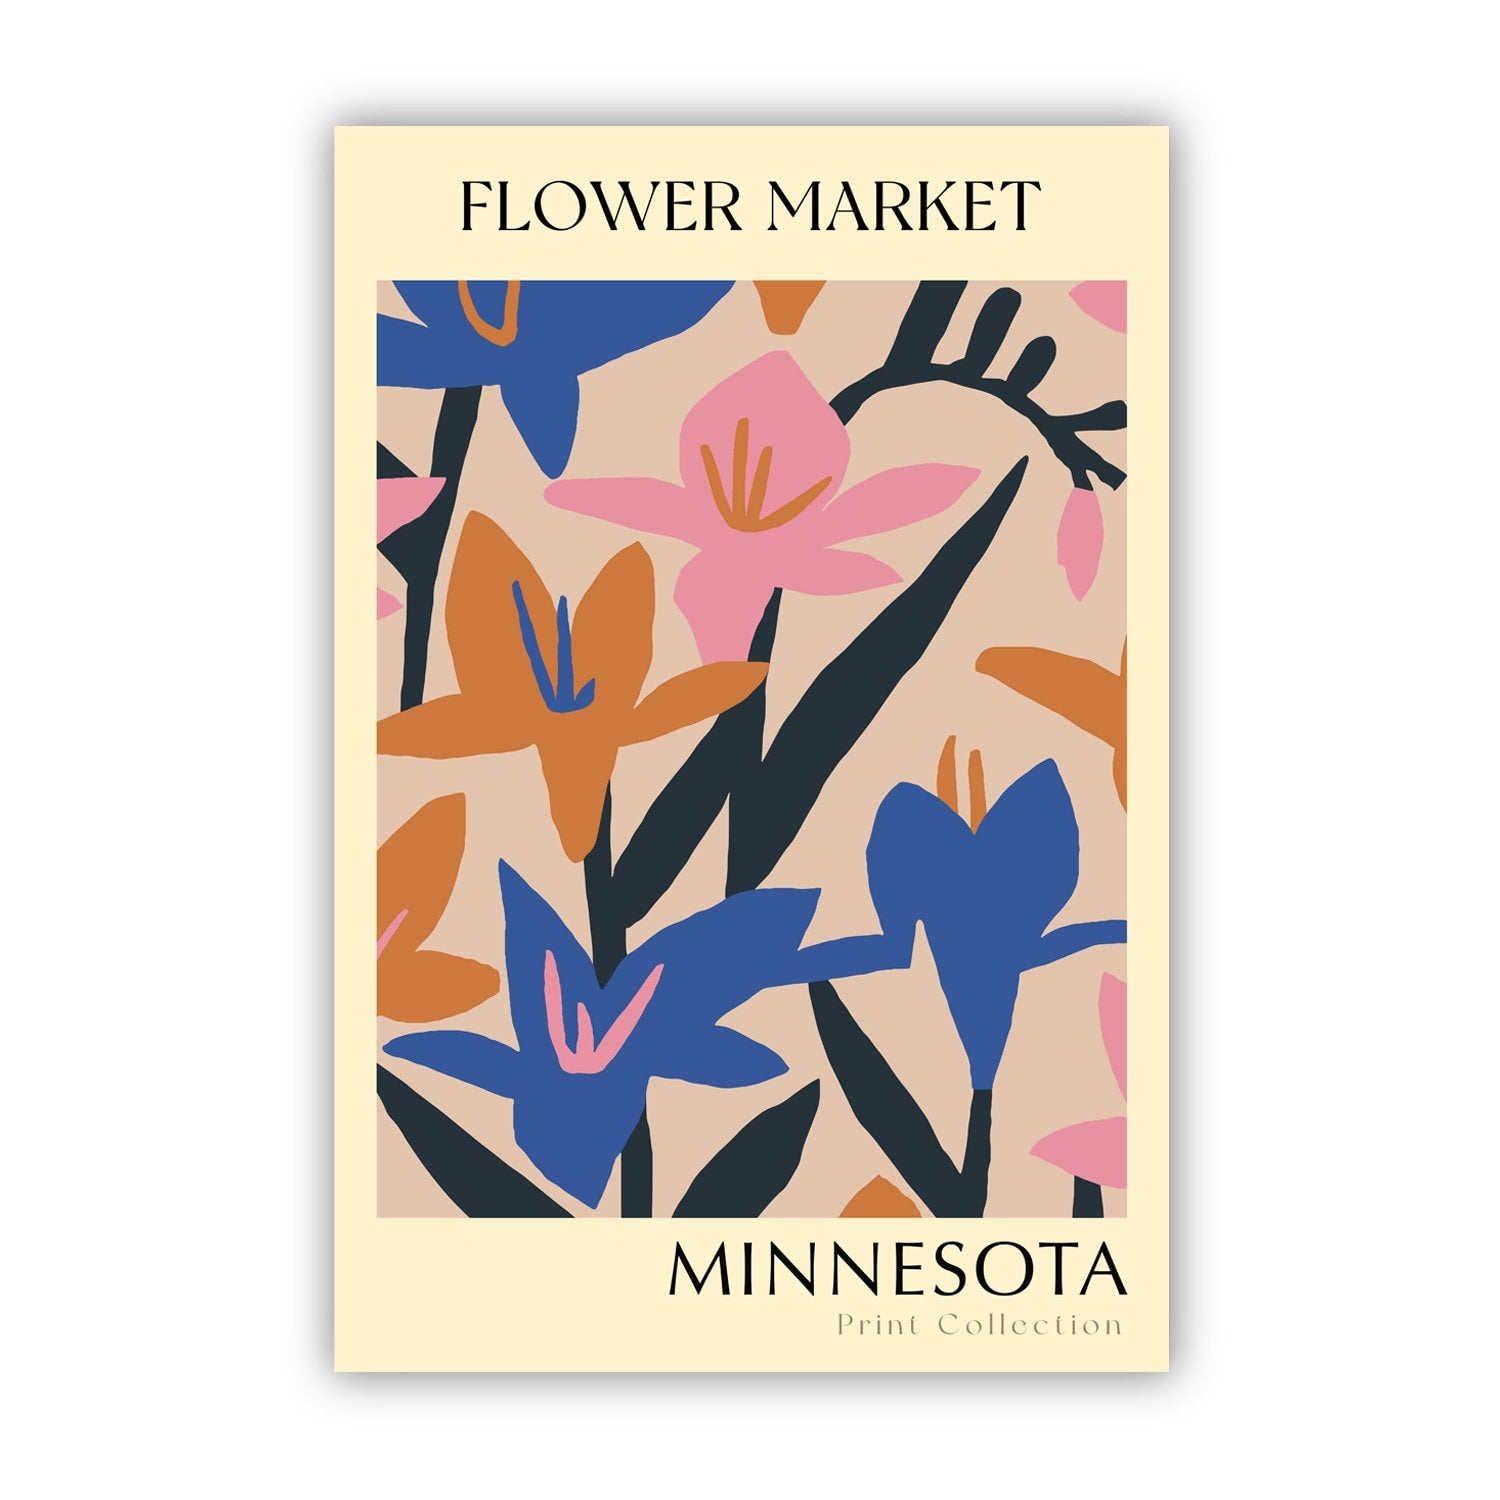 Minnesota State flower print, USA states poster, Minnesota flower market poster, Botanical posters, Nature poster artwork, Boho floral art